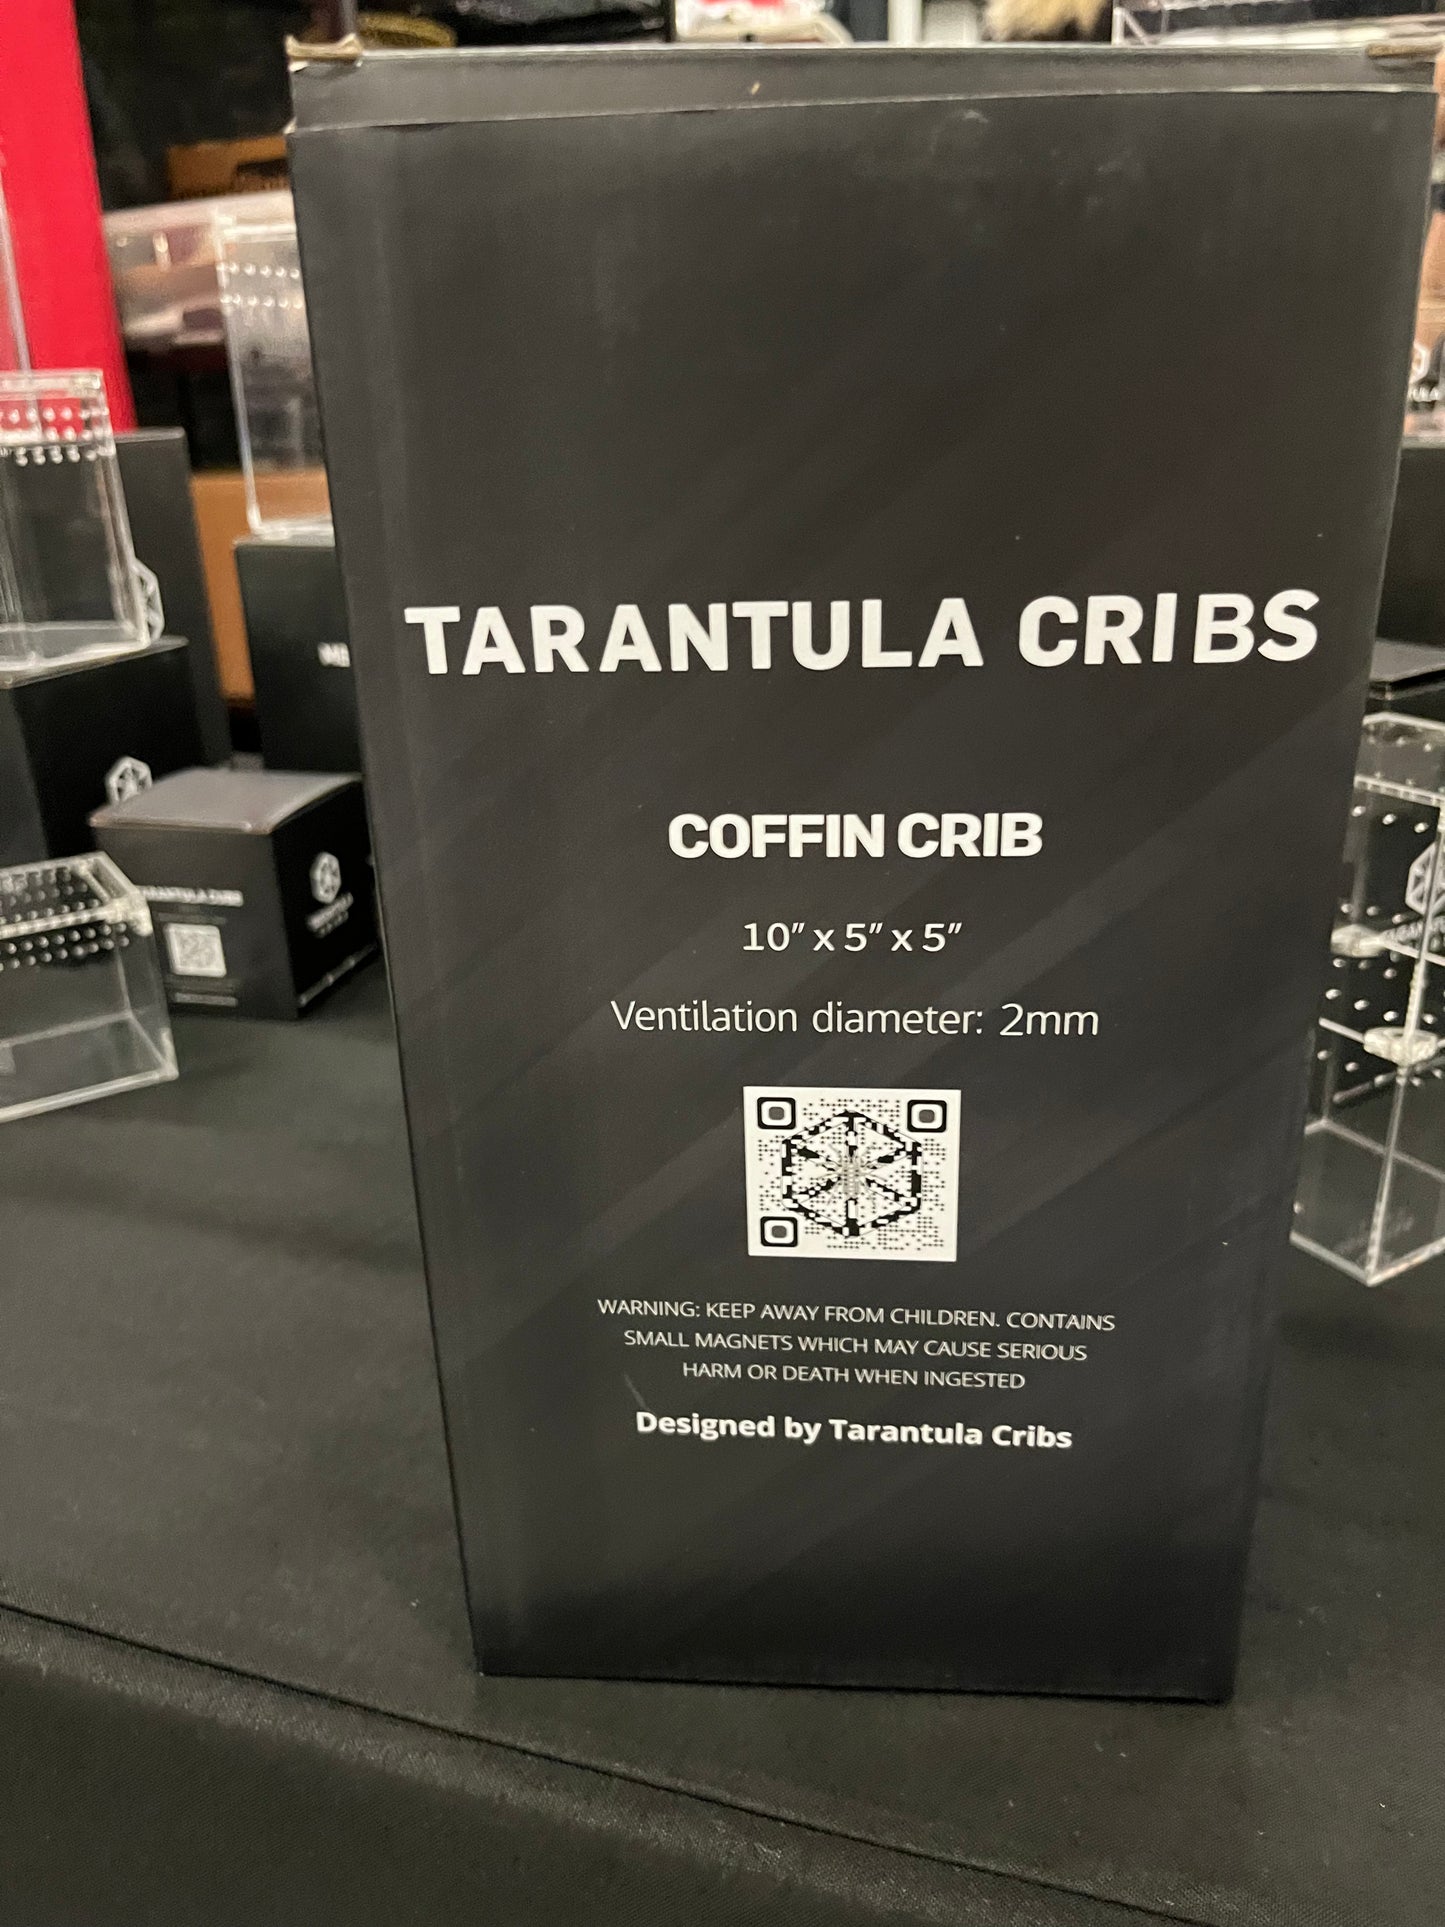 Tarantula Cribs’ Coffin Crib